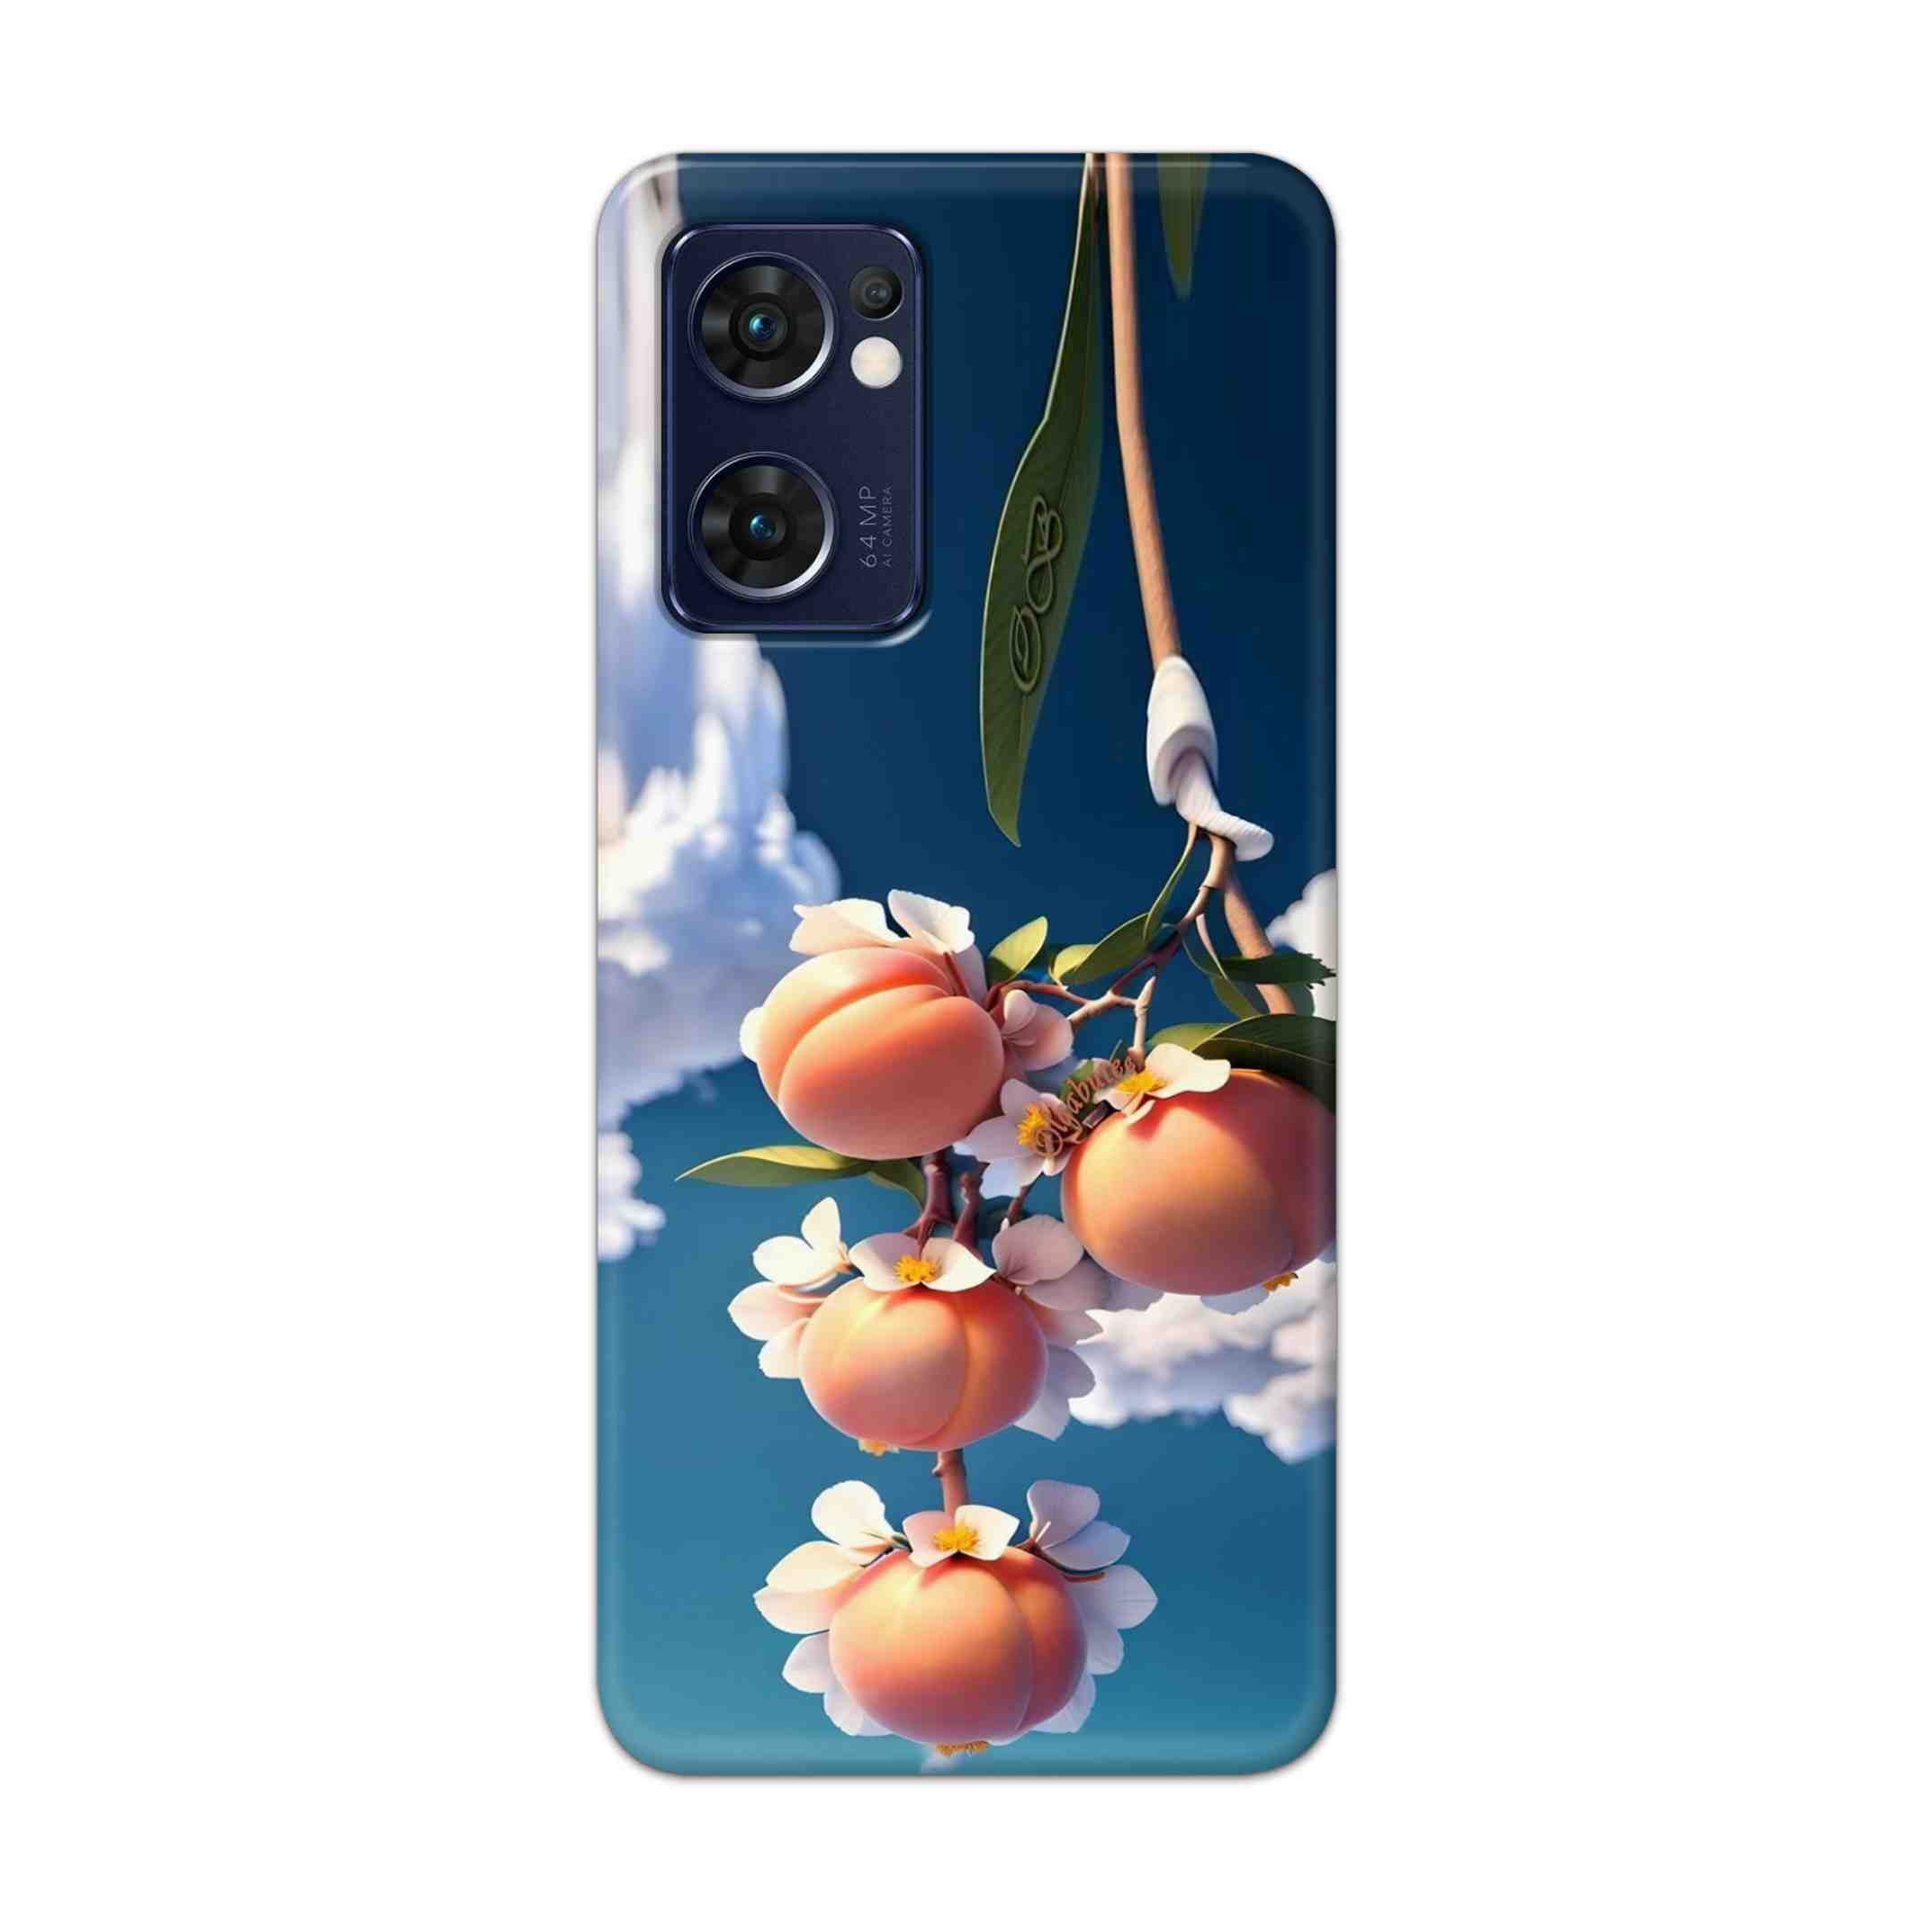 Buy Fruit Hard Back Mobile Phone Case Cover For Reno 7 5G Online